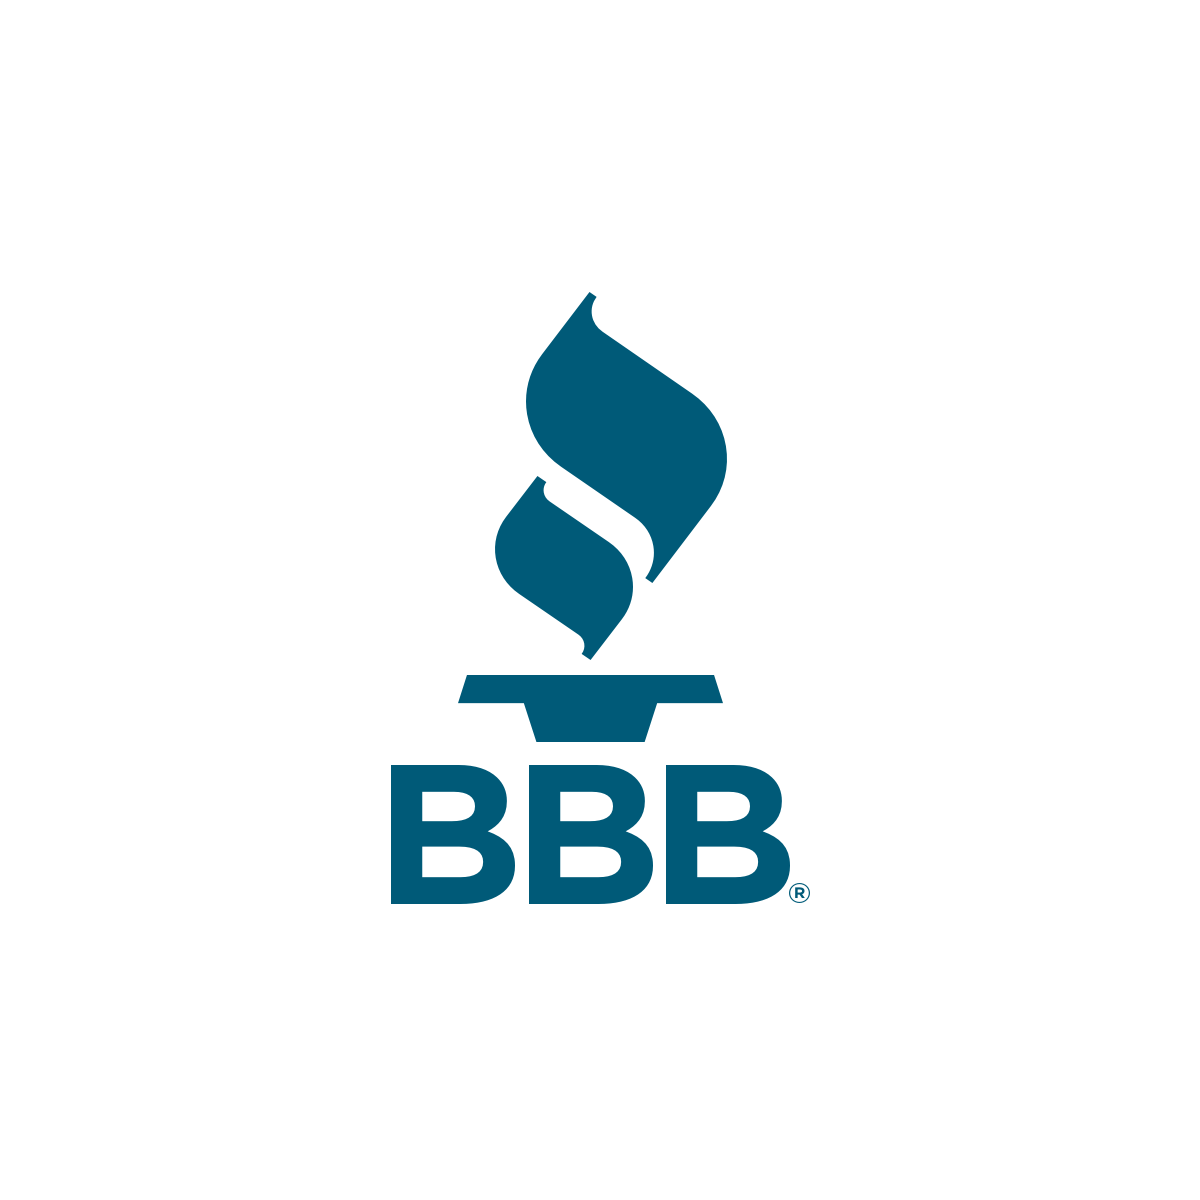 BBB® logo